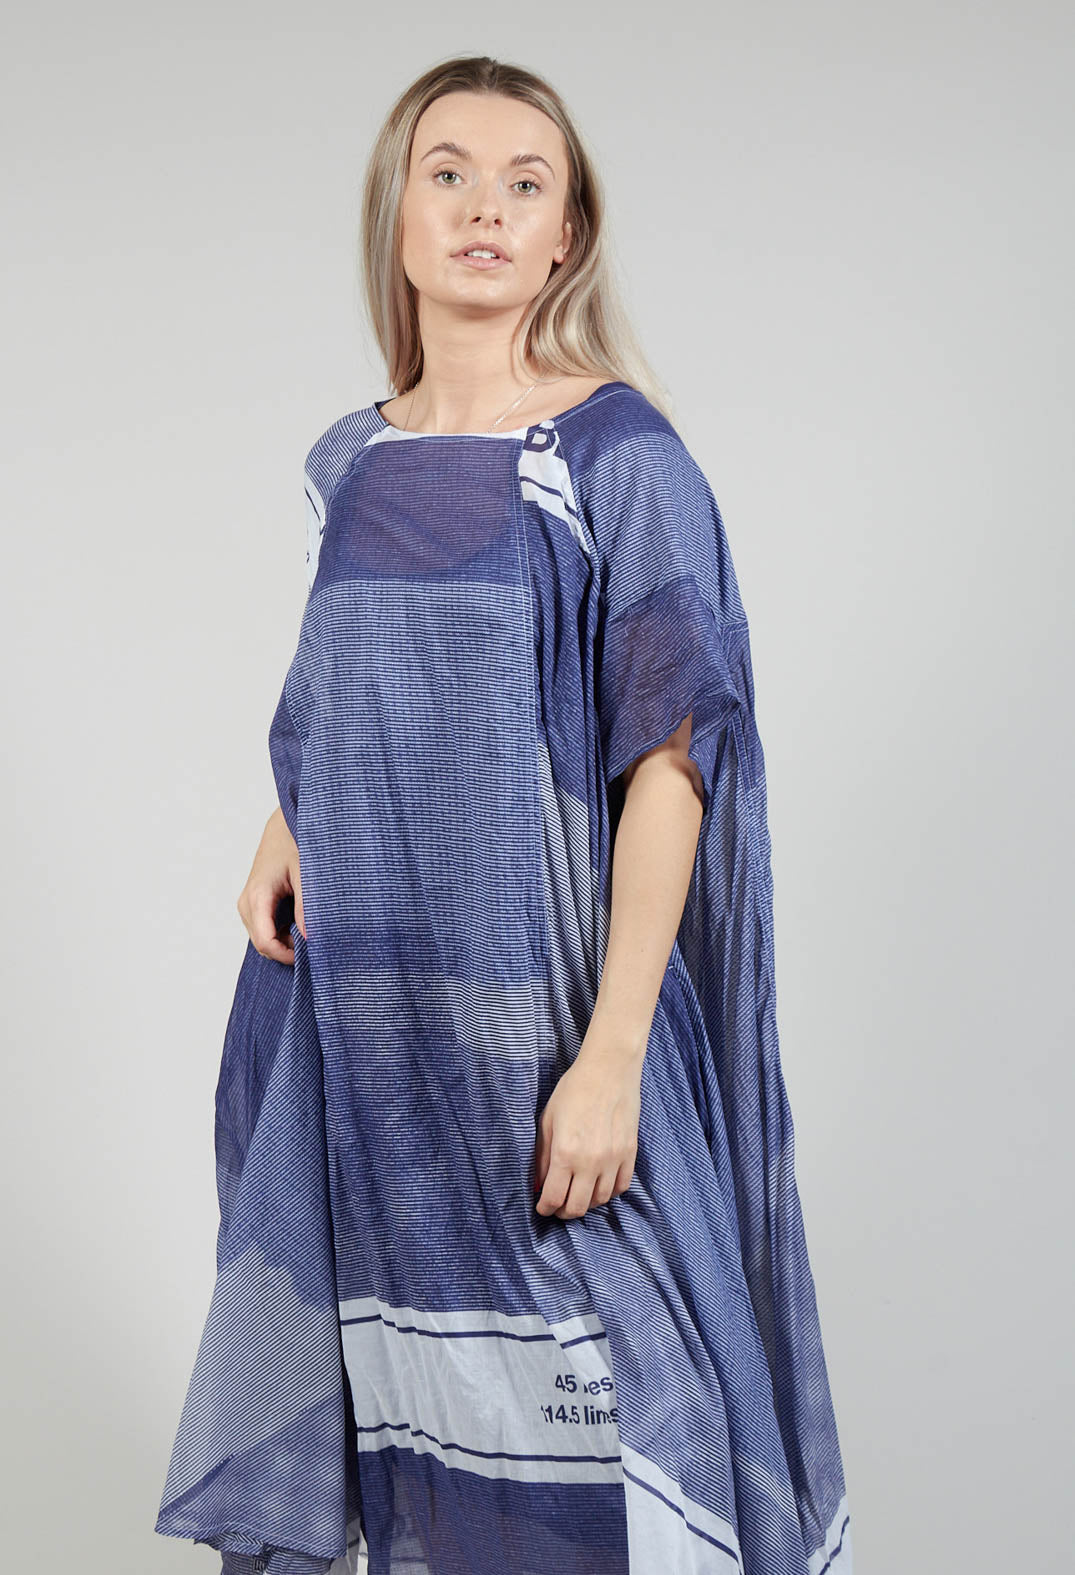 Short Sleeve Cotton Dress in Azur Print